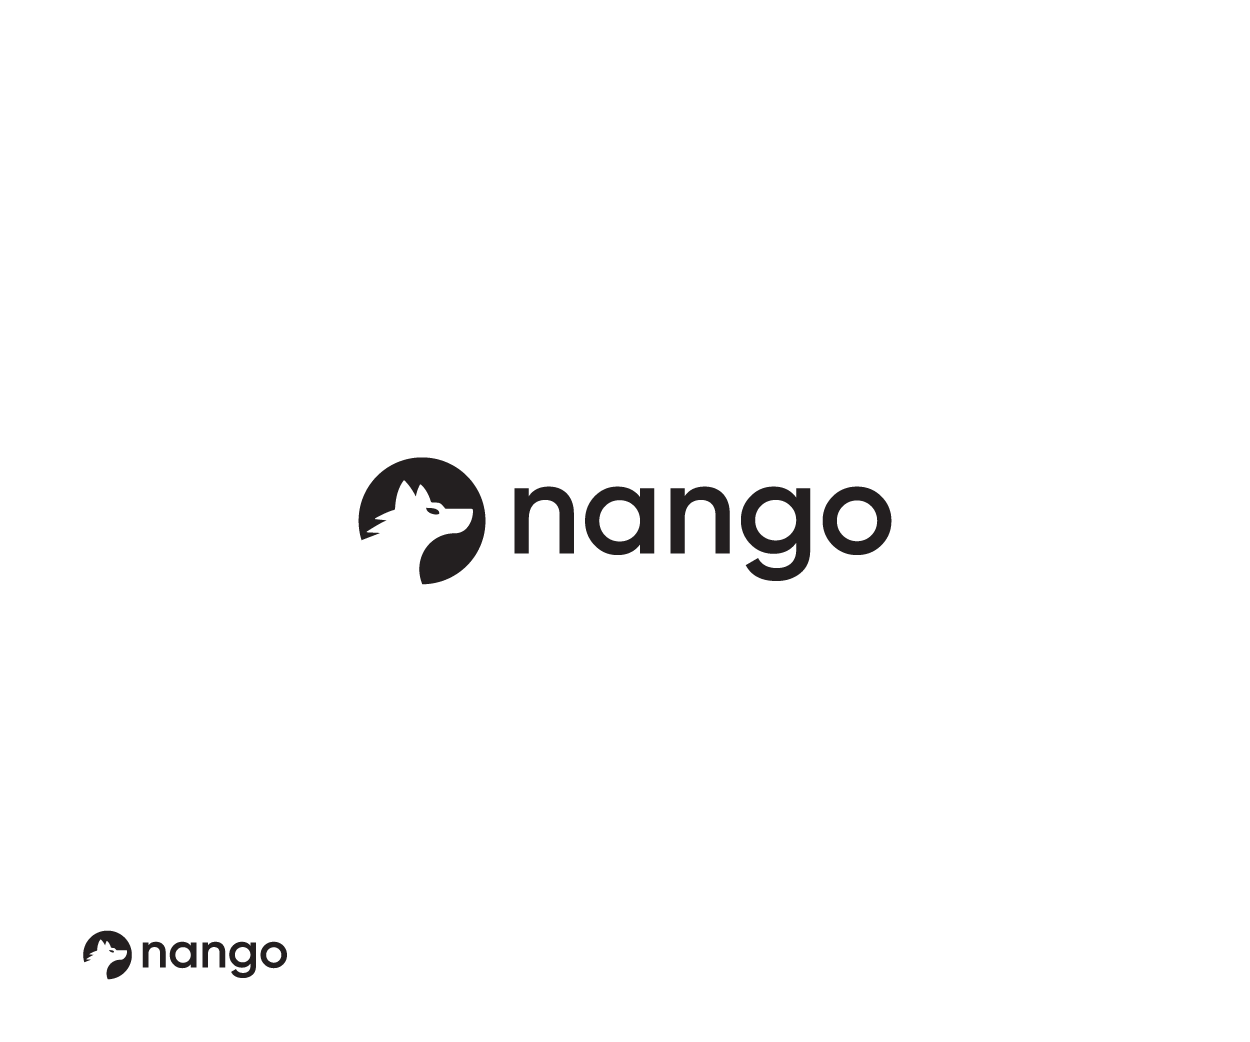 Nango Brand Identity Design